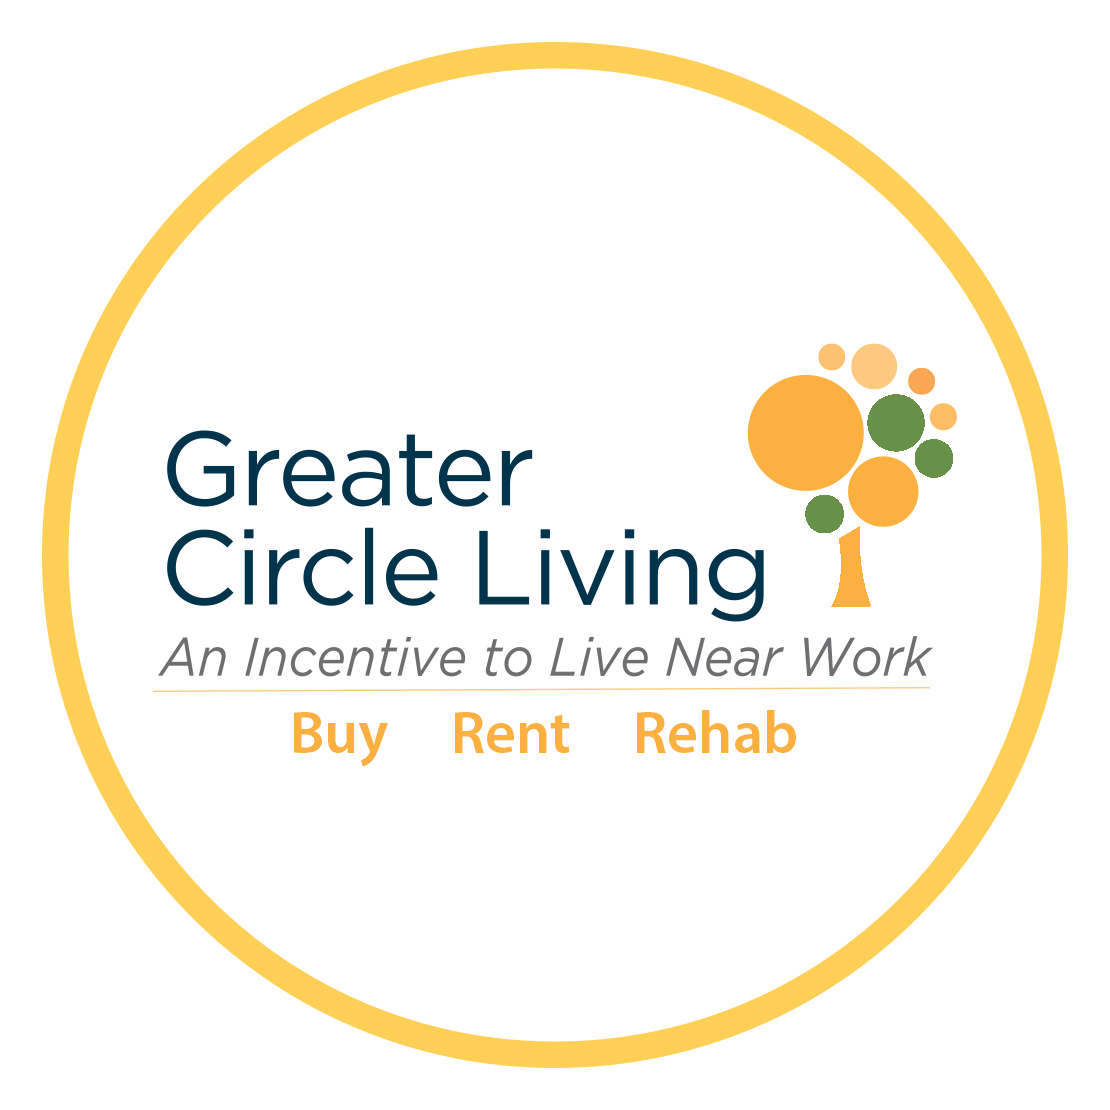 Great Circle Living